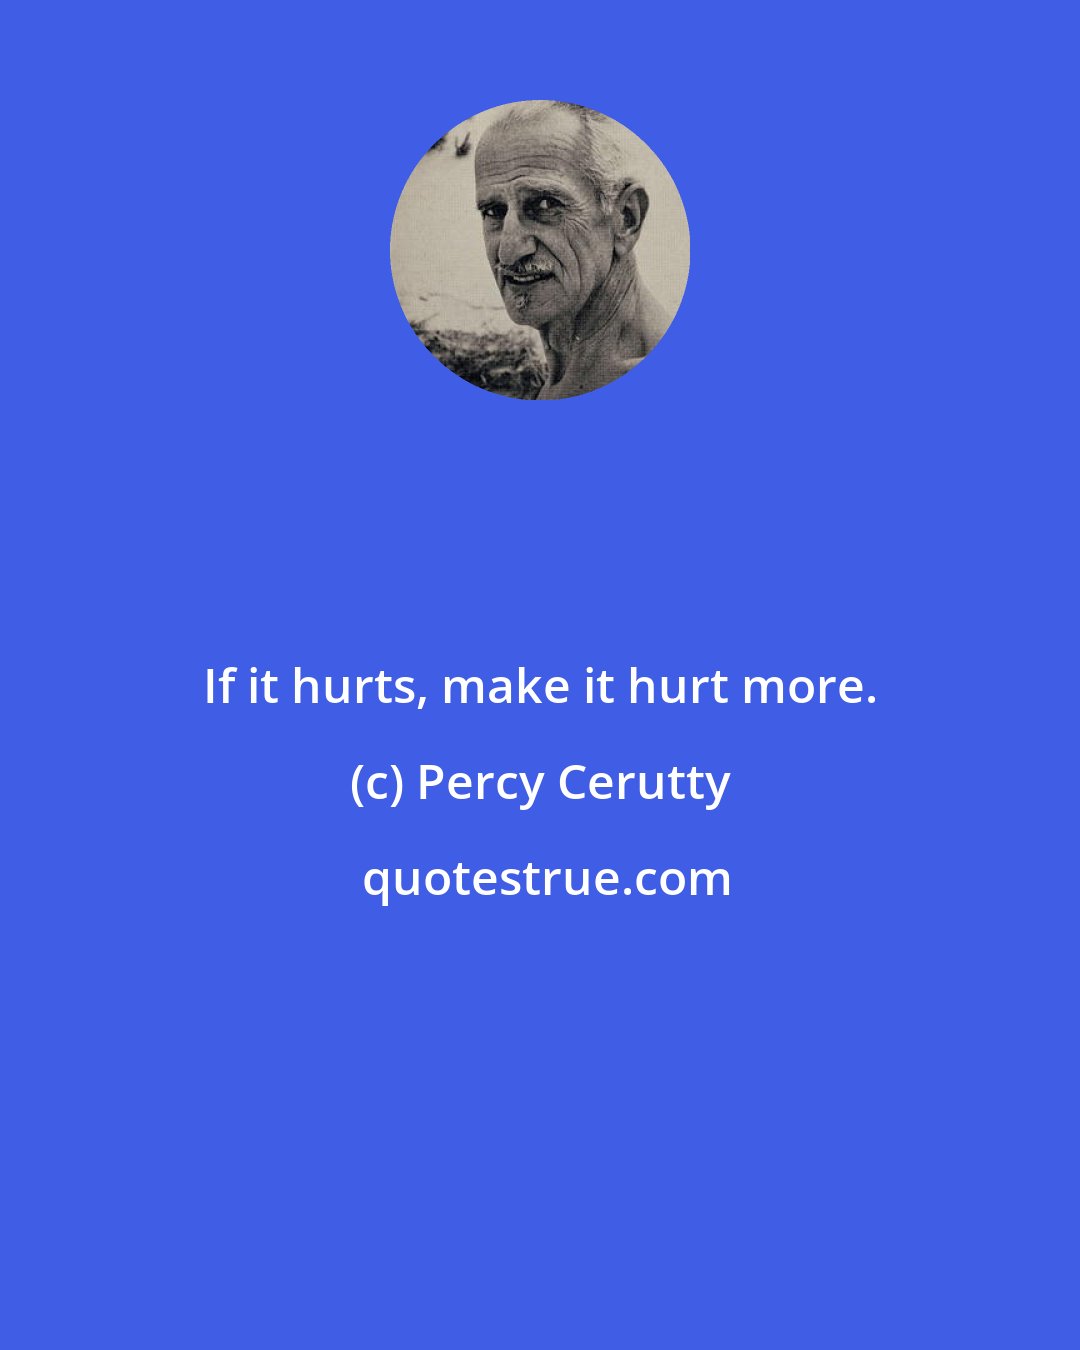 Percy Cerutty: If it hurts, make it hurt more.